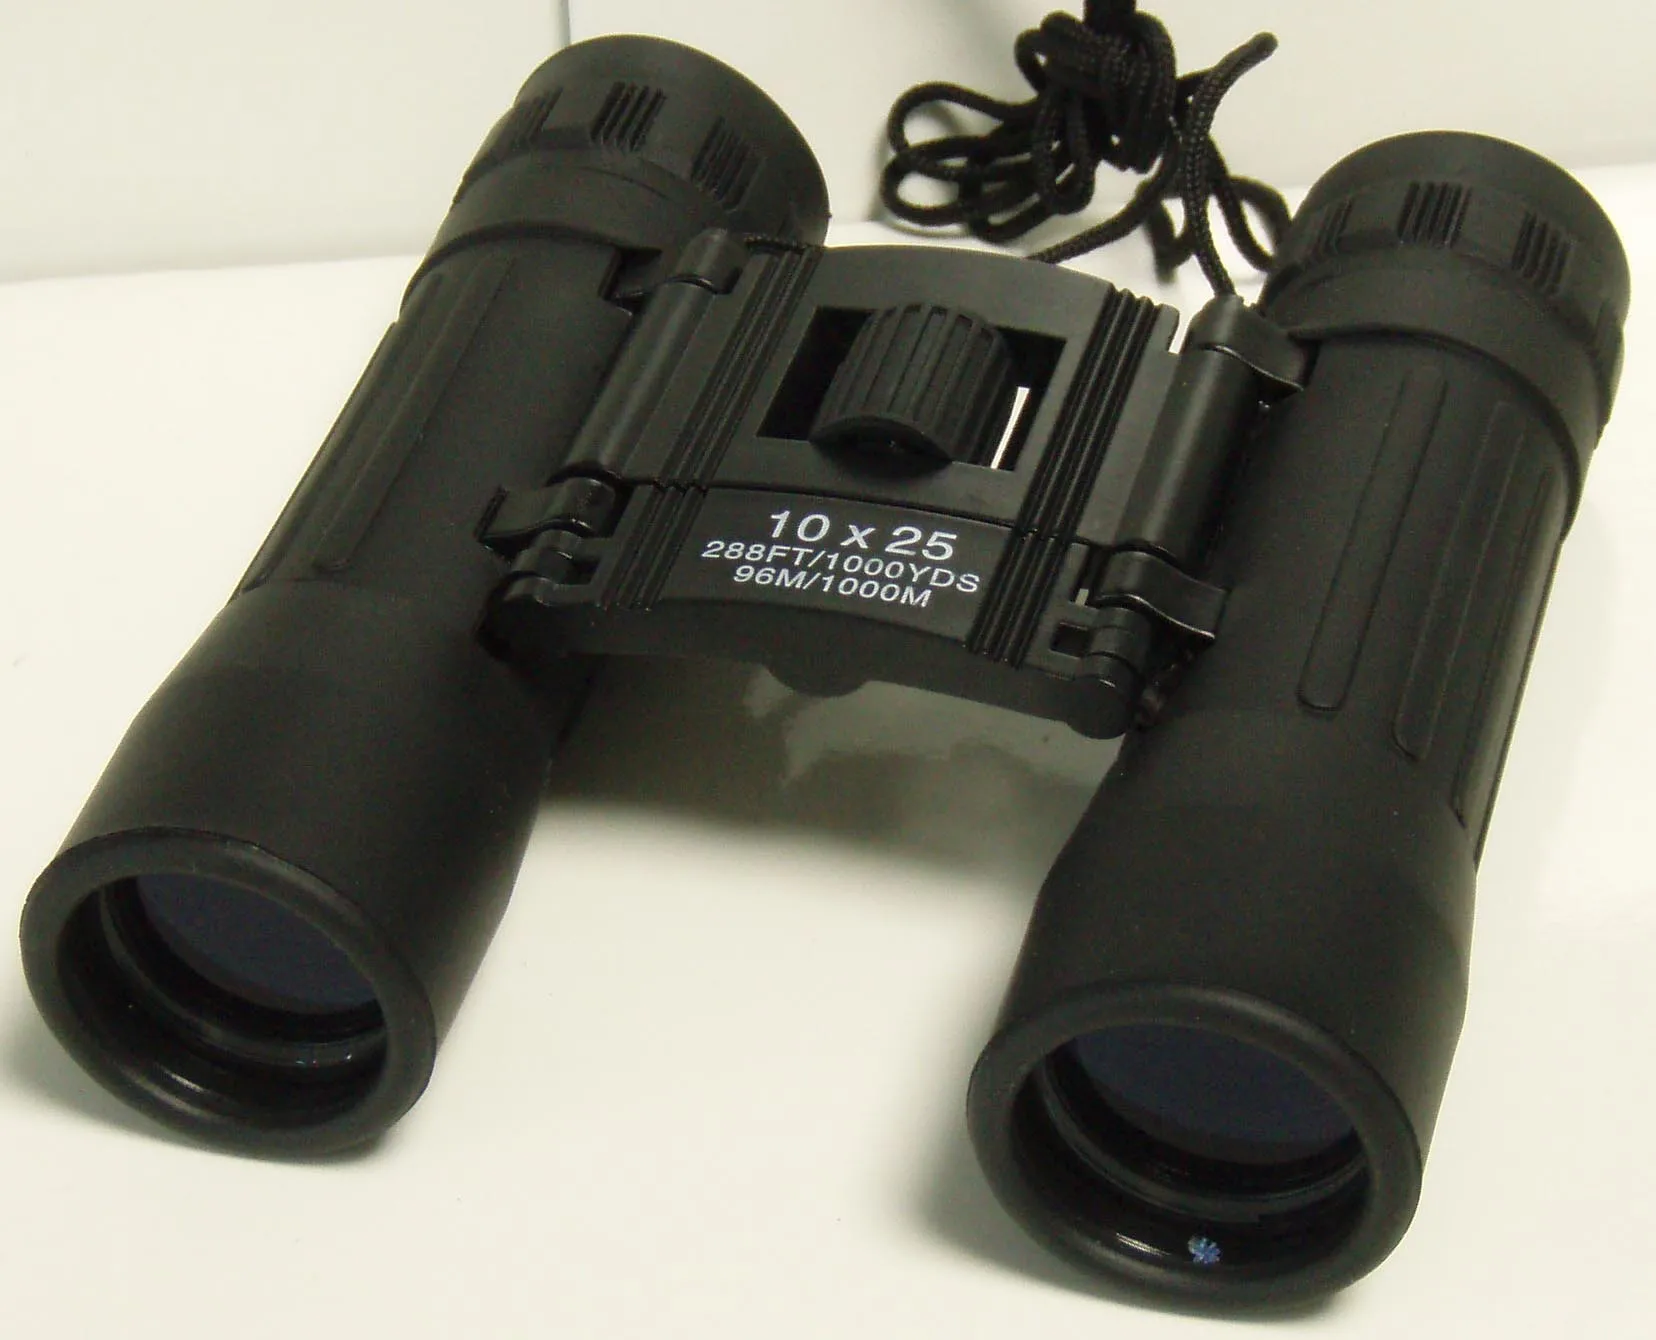 10X25 Optical Lens  Binoculars  10x Magnification Optic Binoculars China Binocular For Sale